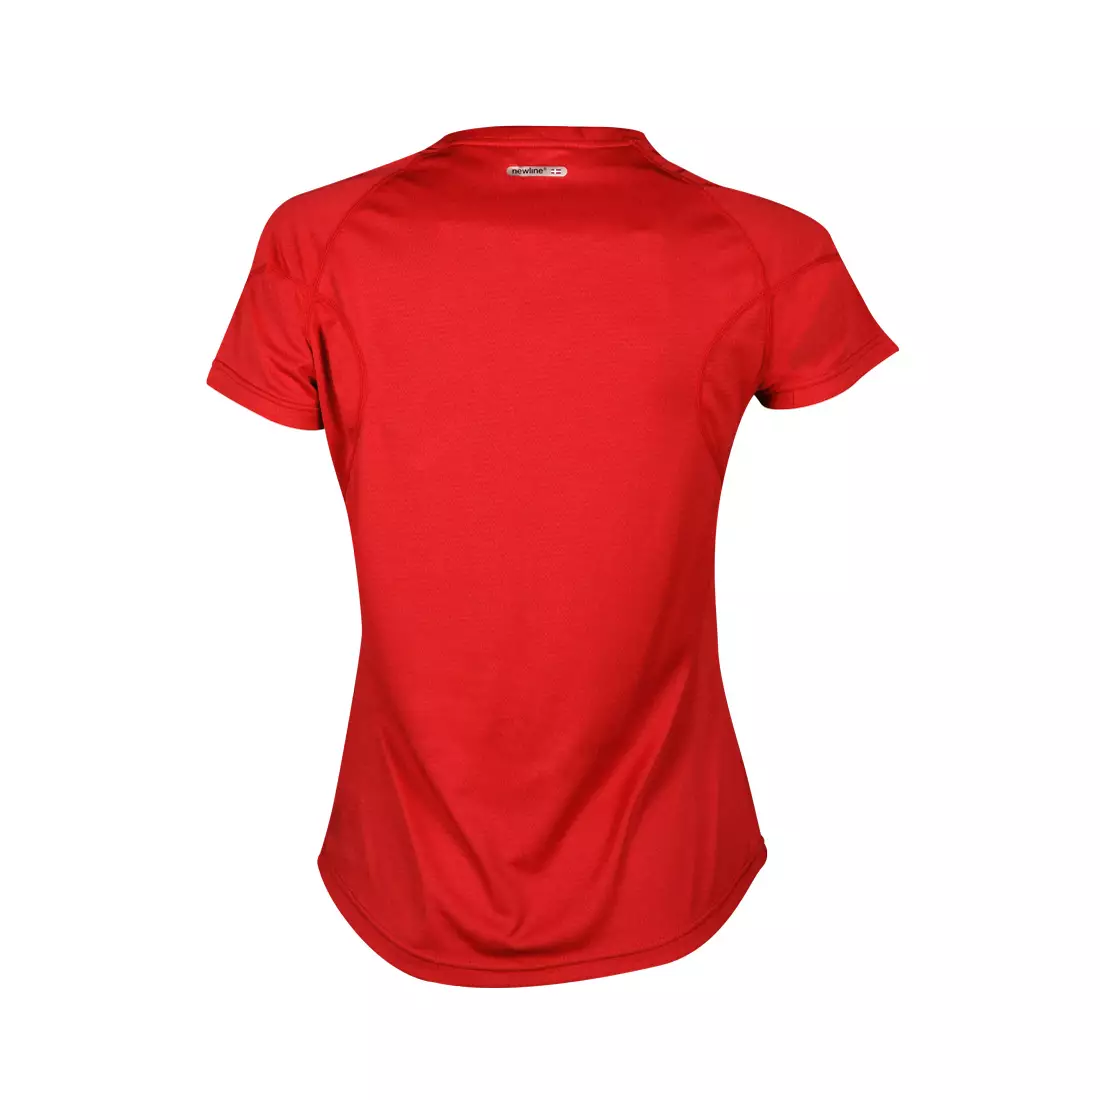 NEWLINE BASE COOLMAX TEE - dámské běžecké tričko 13603-04